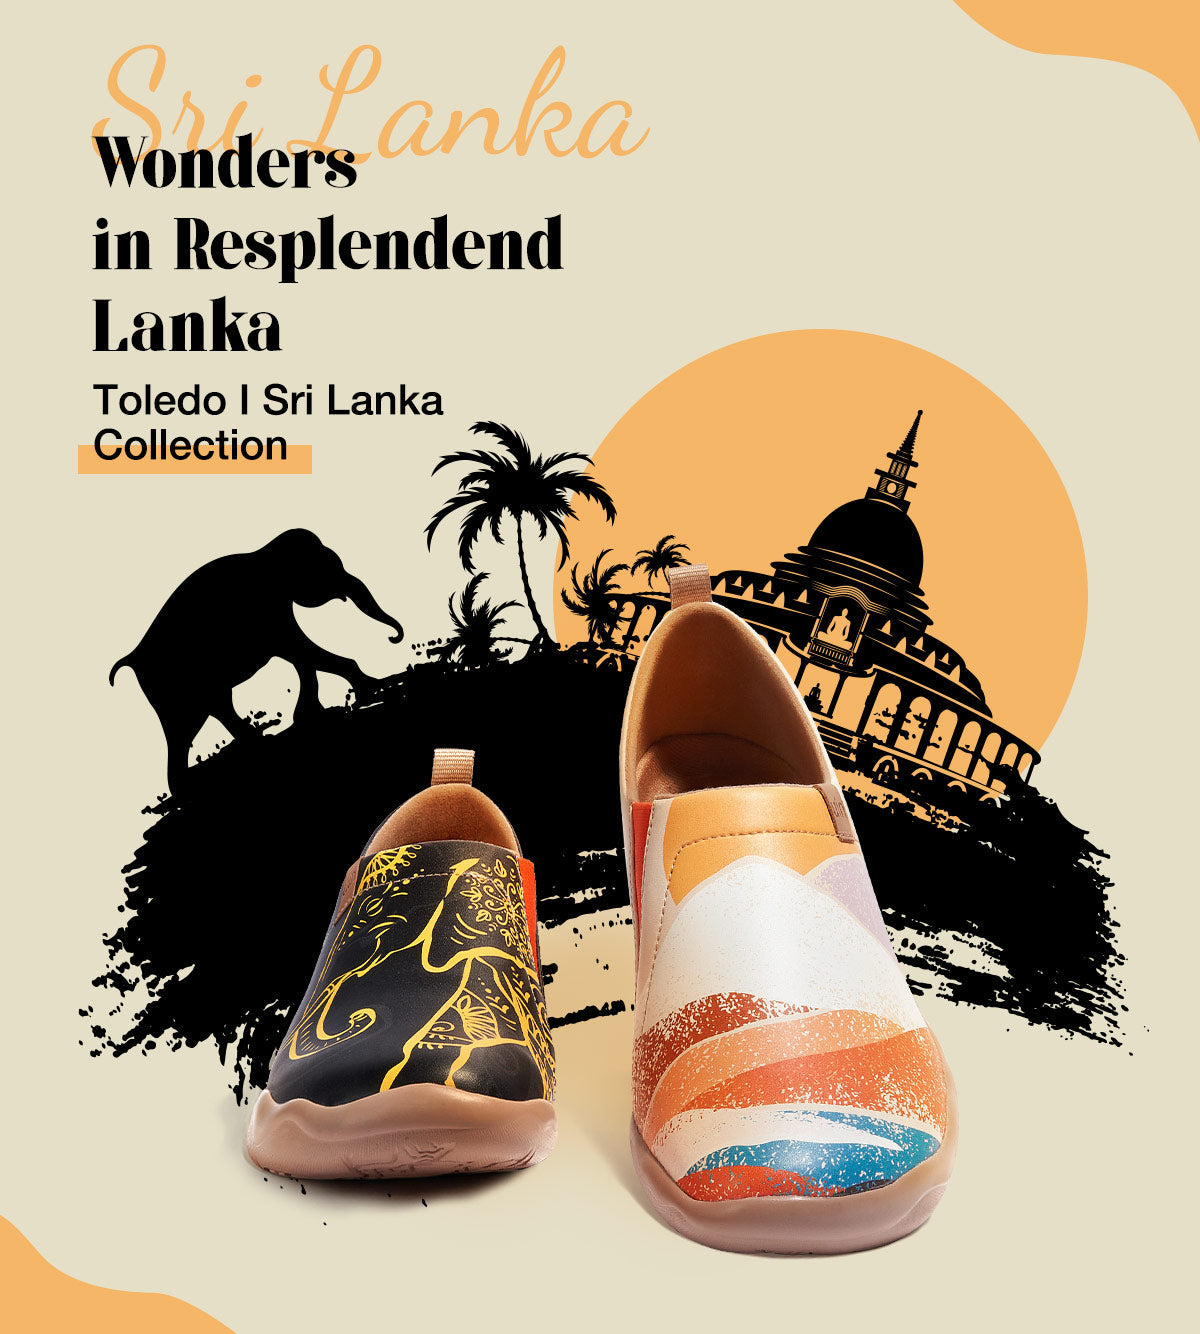 Toledo I Sri Lanka Collection